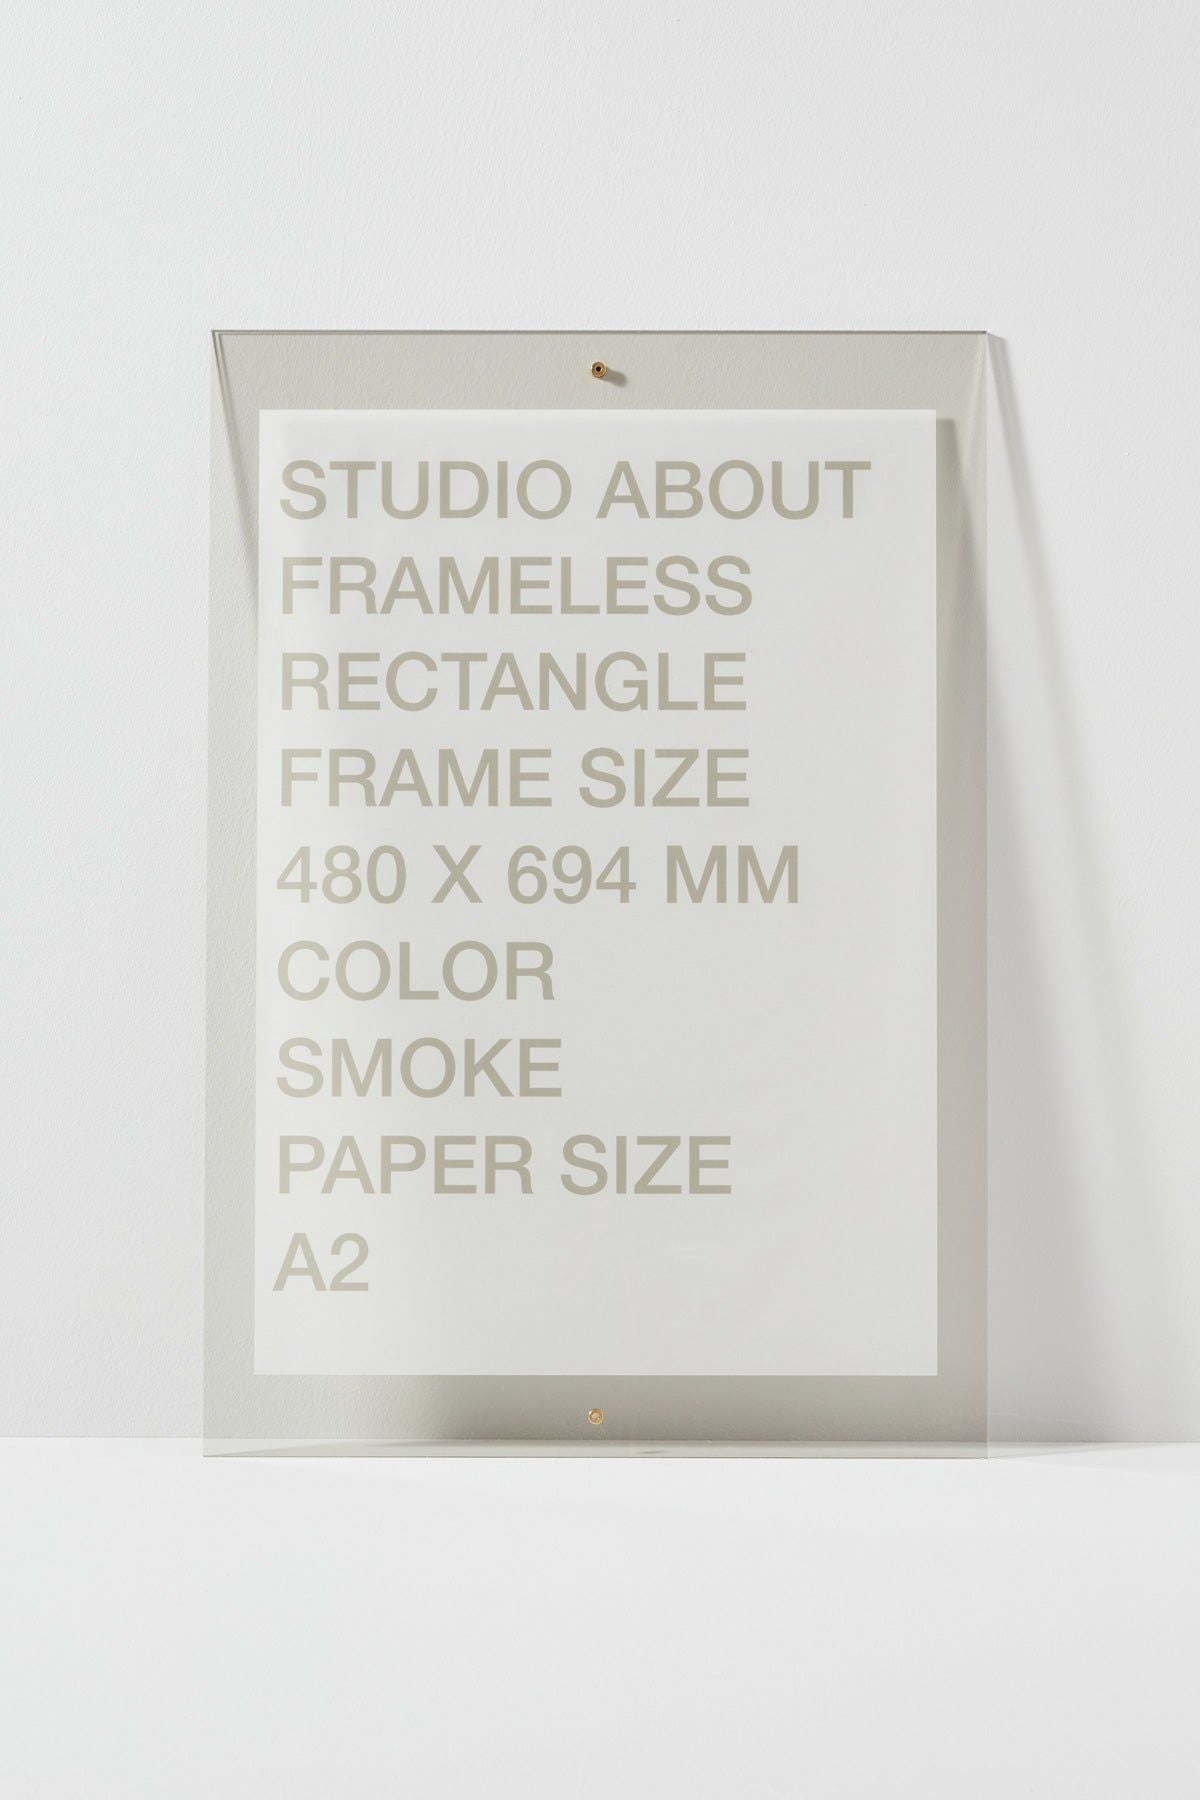 Studio About Frameless Frame A2 Rectangle, Smoke